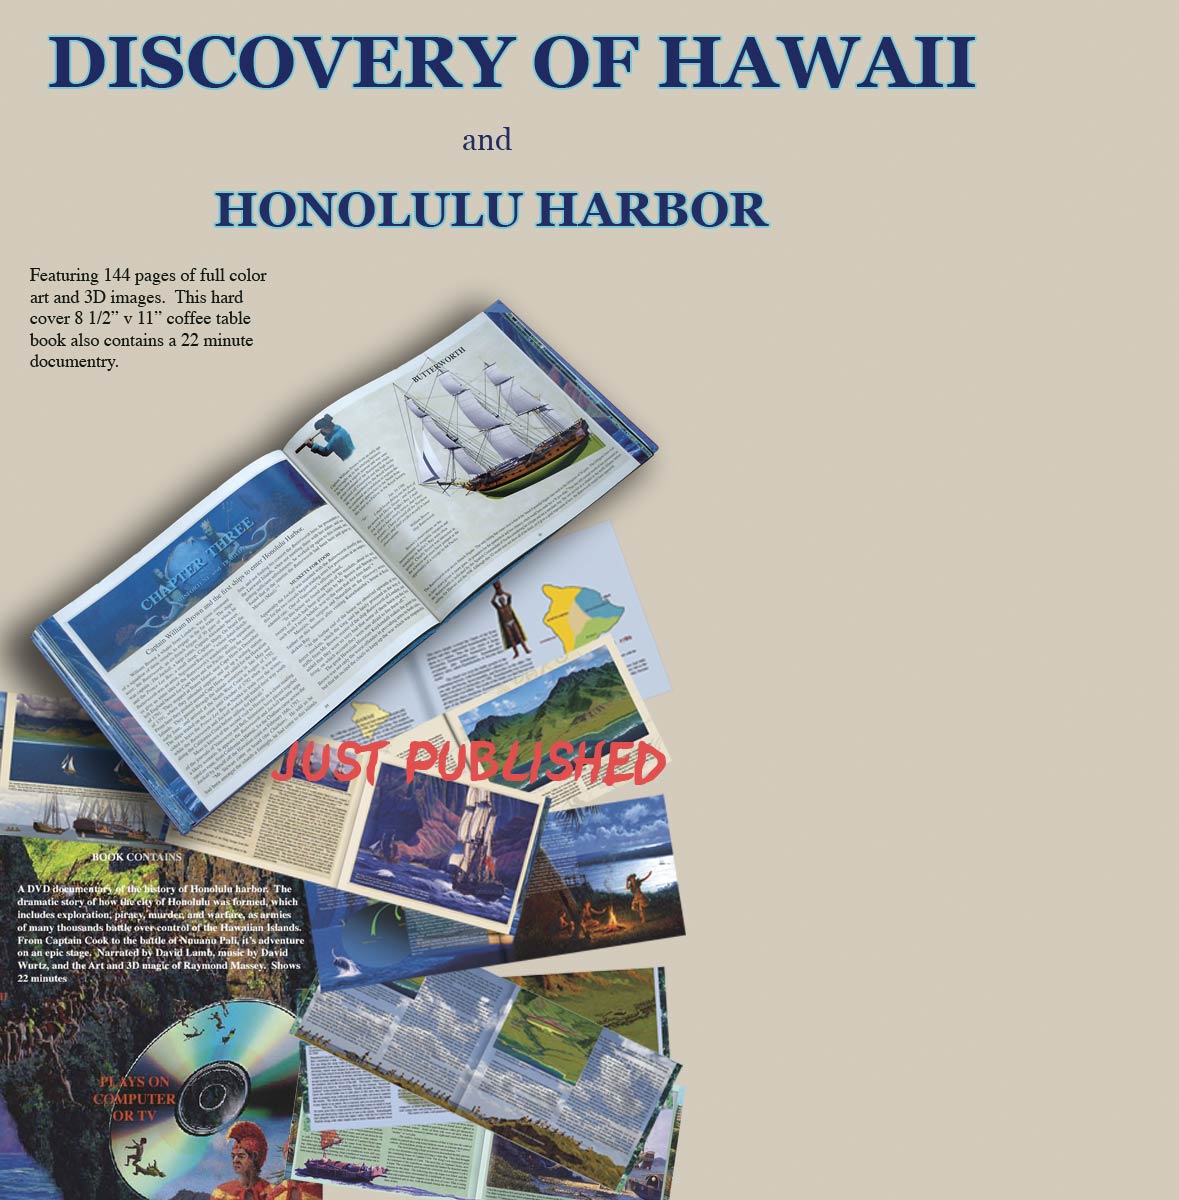 Discovery of Hawaii and Honolulu Harbor book